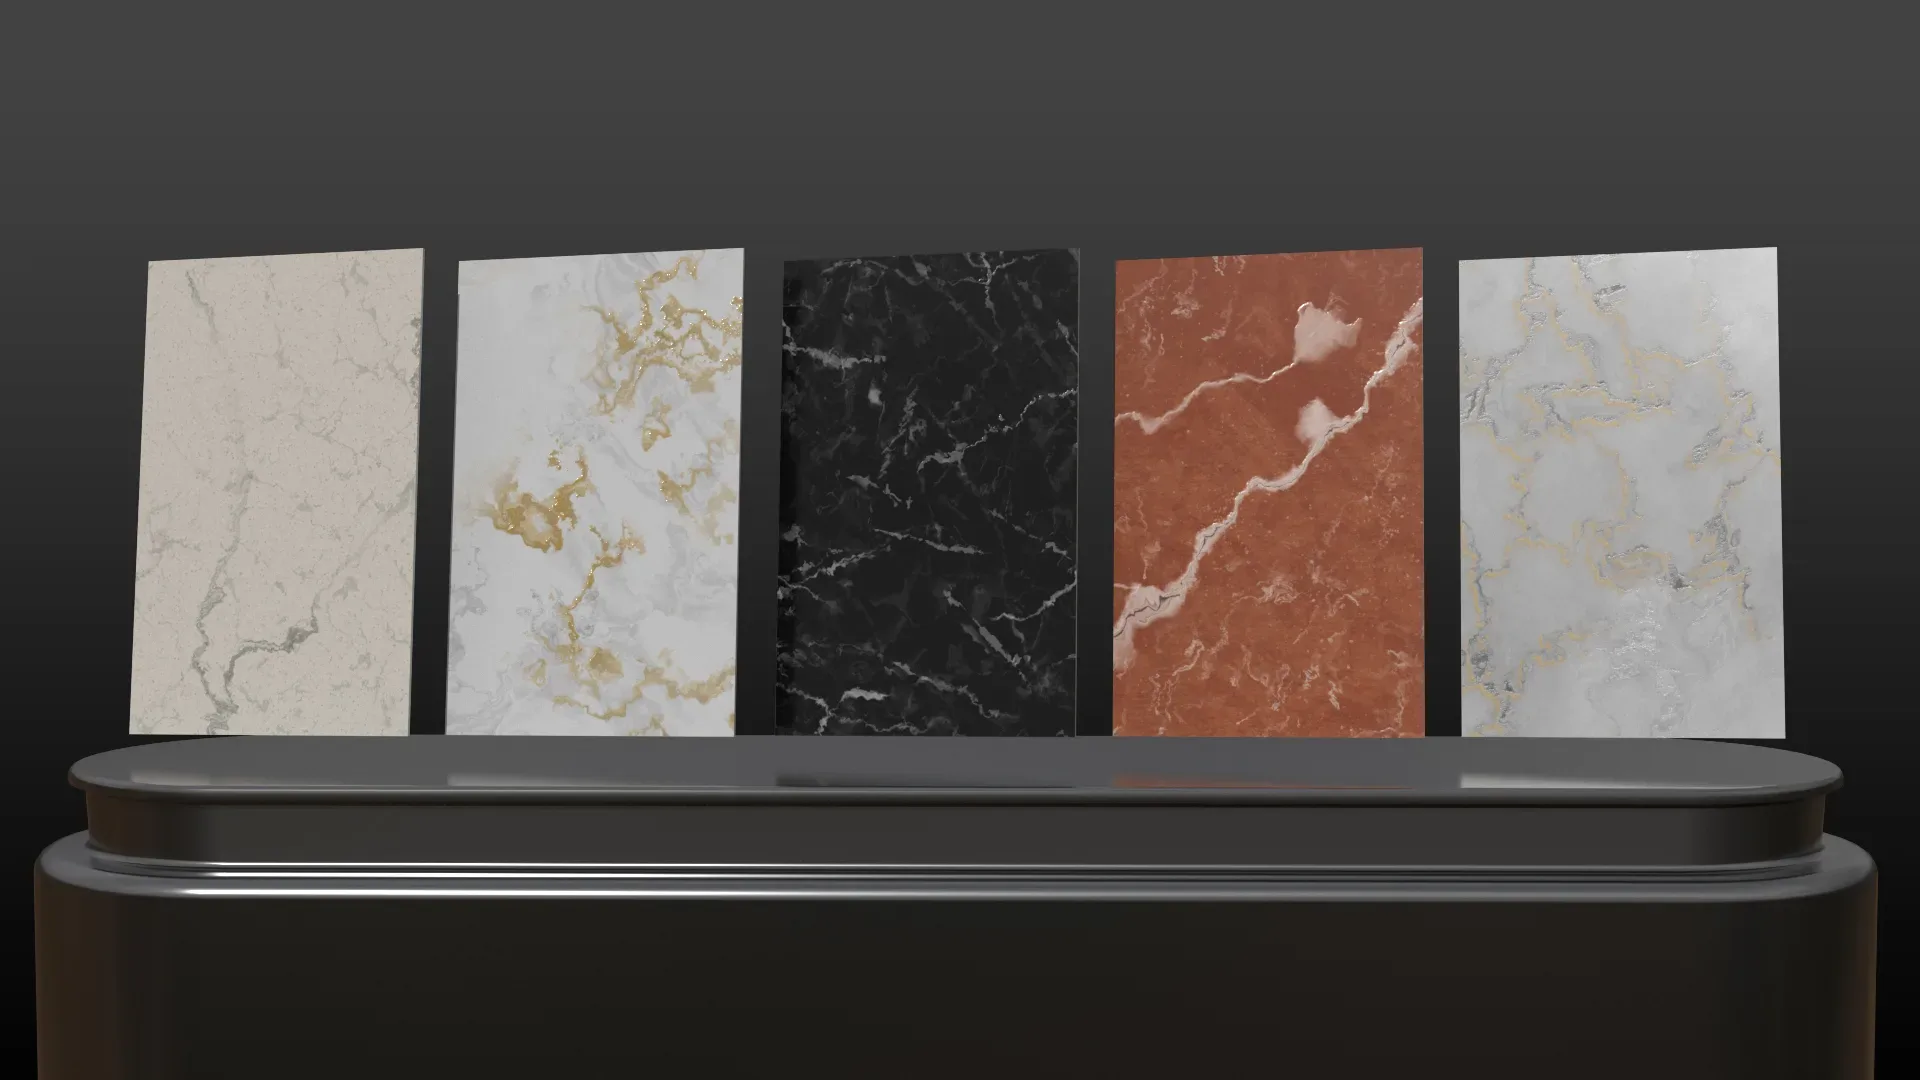 30 Marble Materials (SBSAR, 4K PBR Texture)